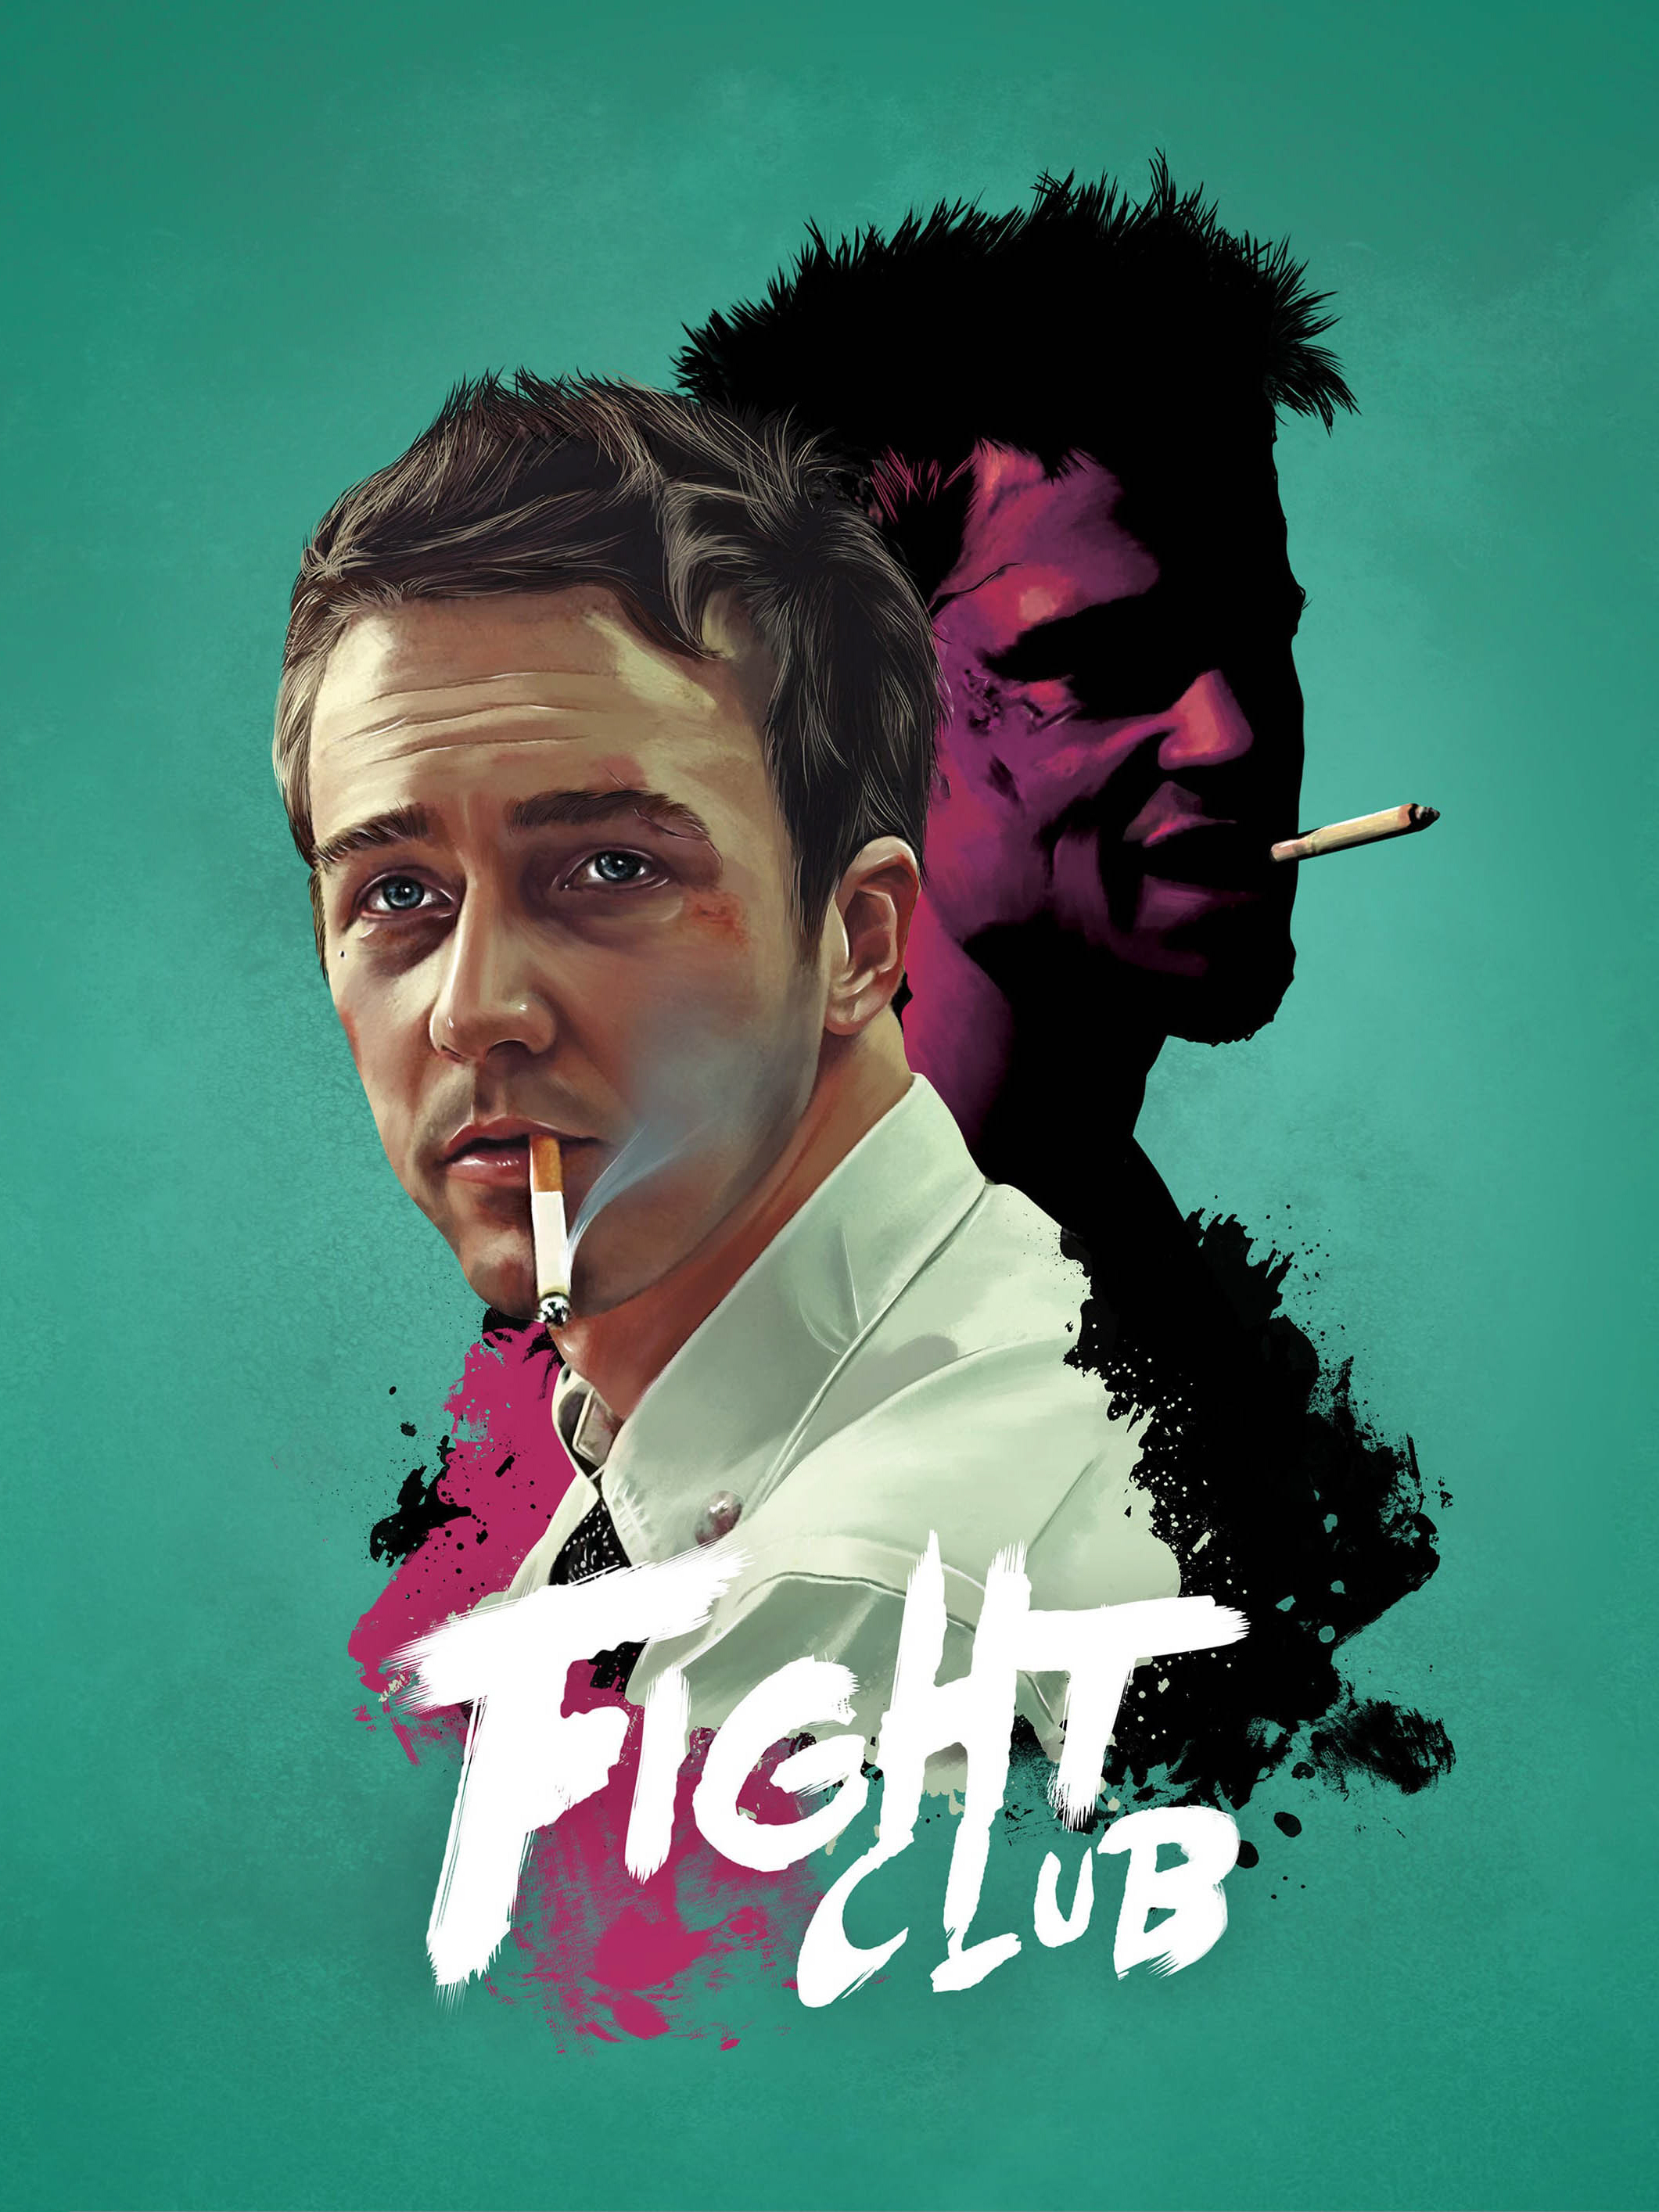 fight club full movie streaming